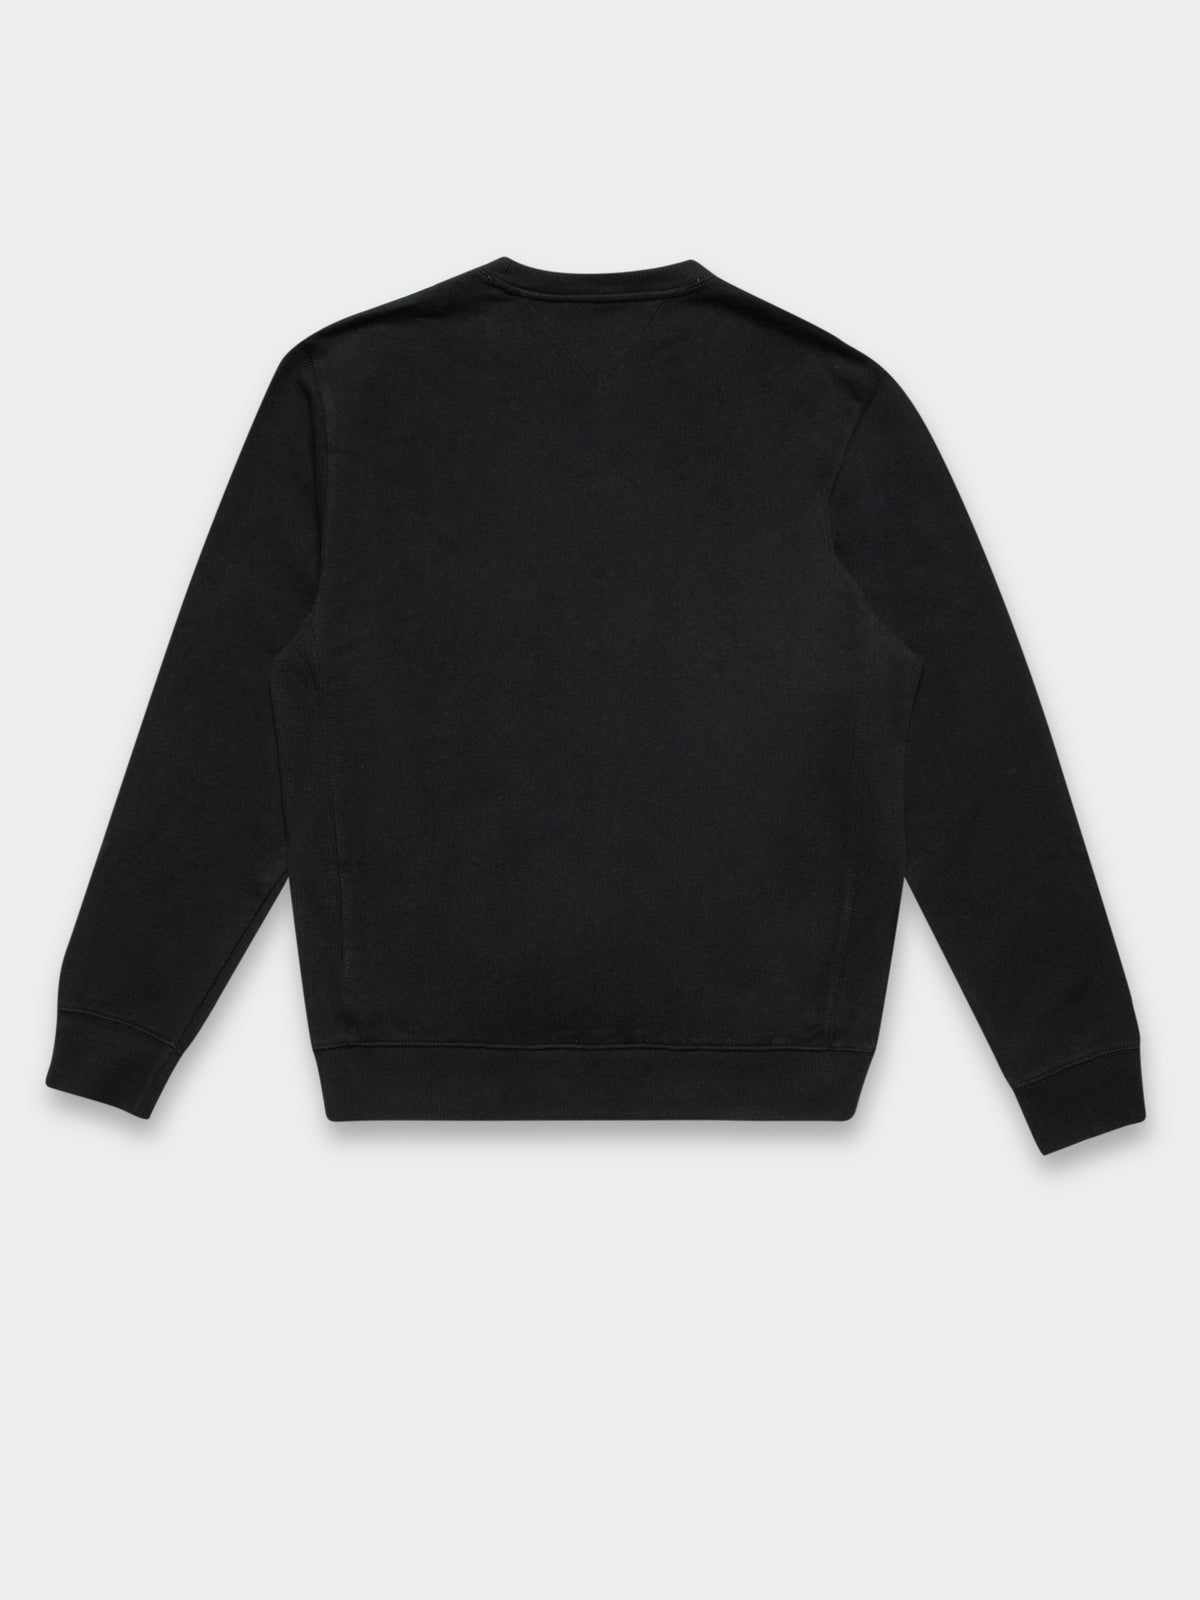 Signature Timeless Sweatshirt in Black